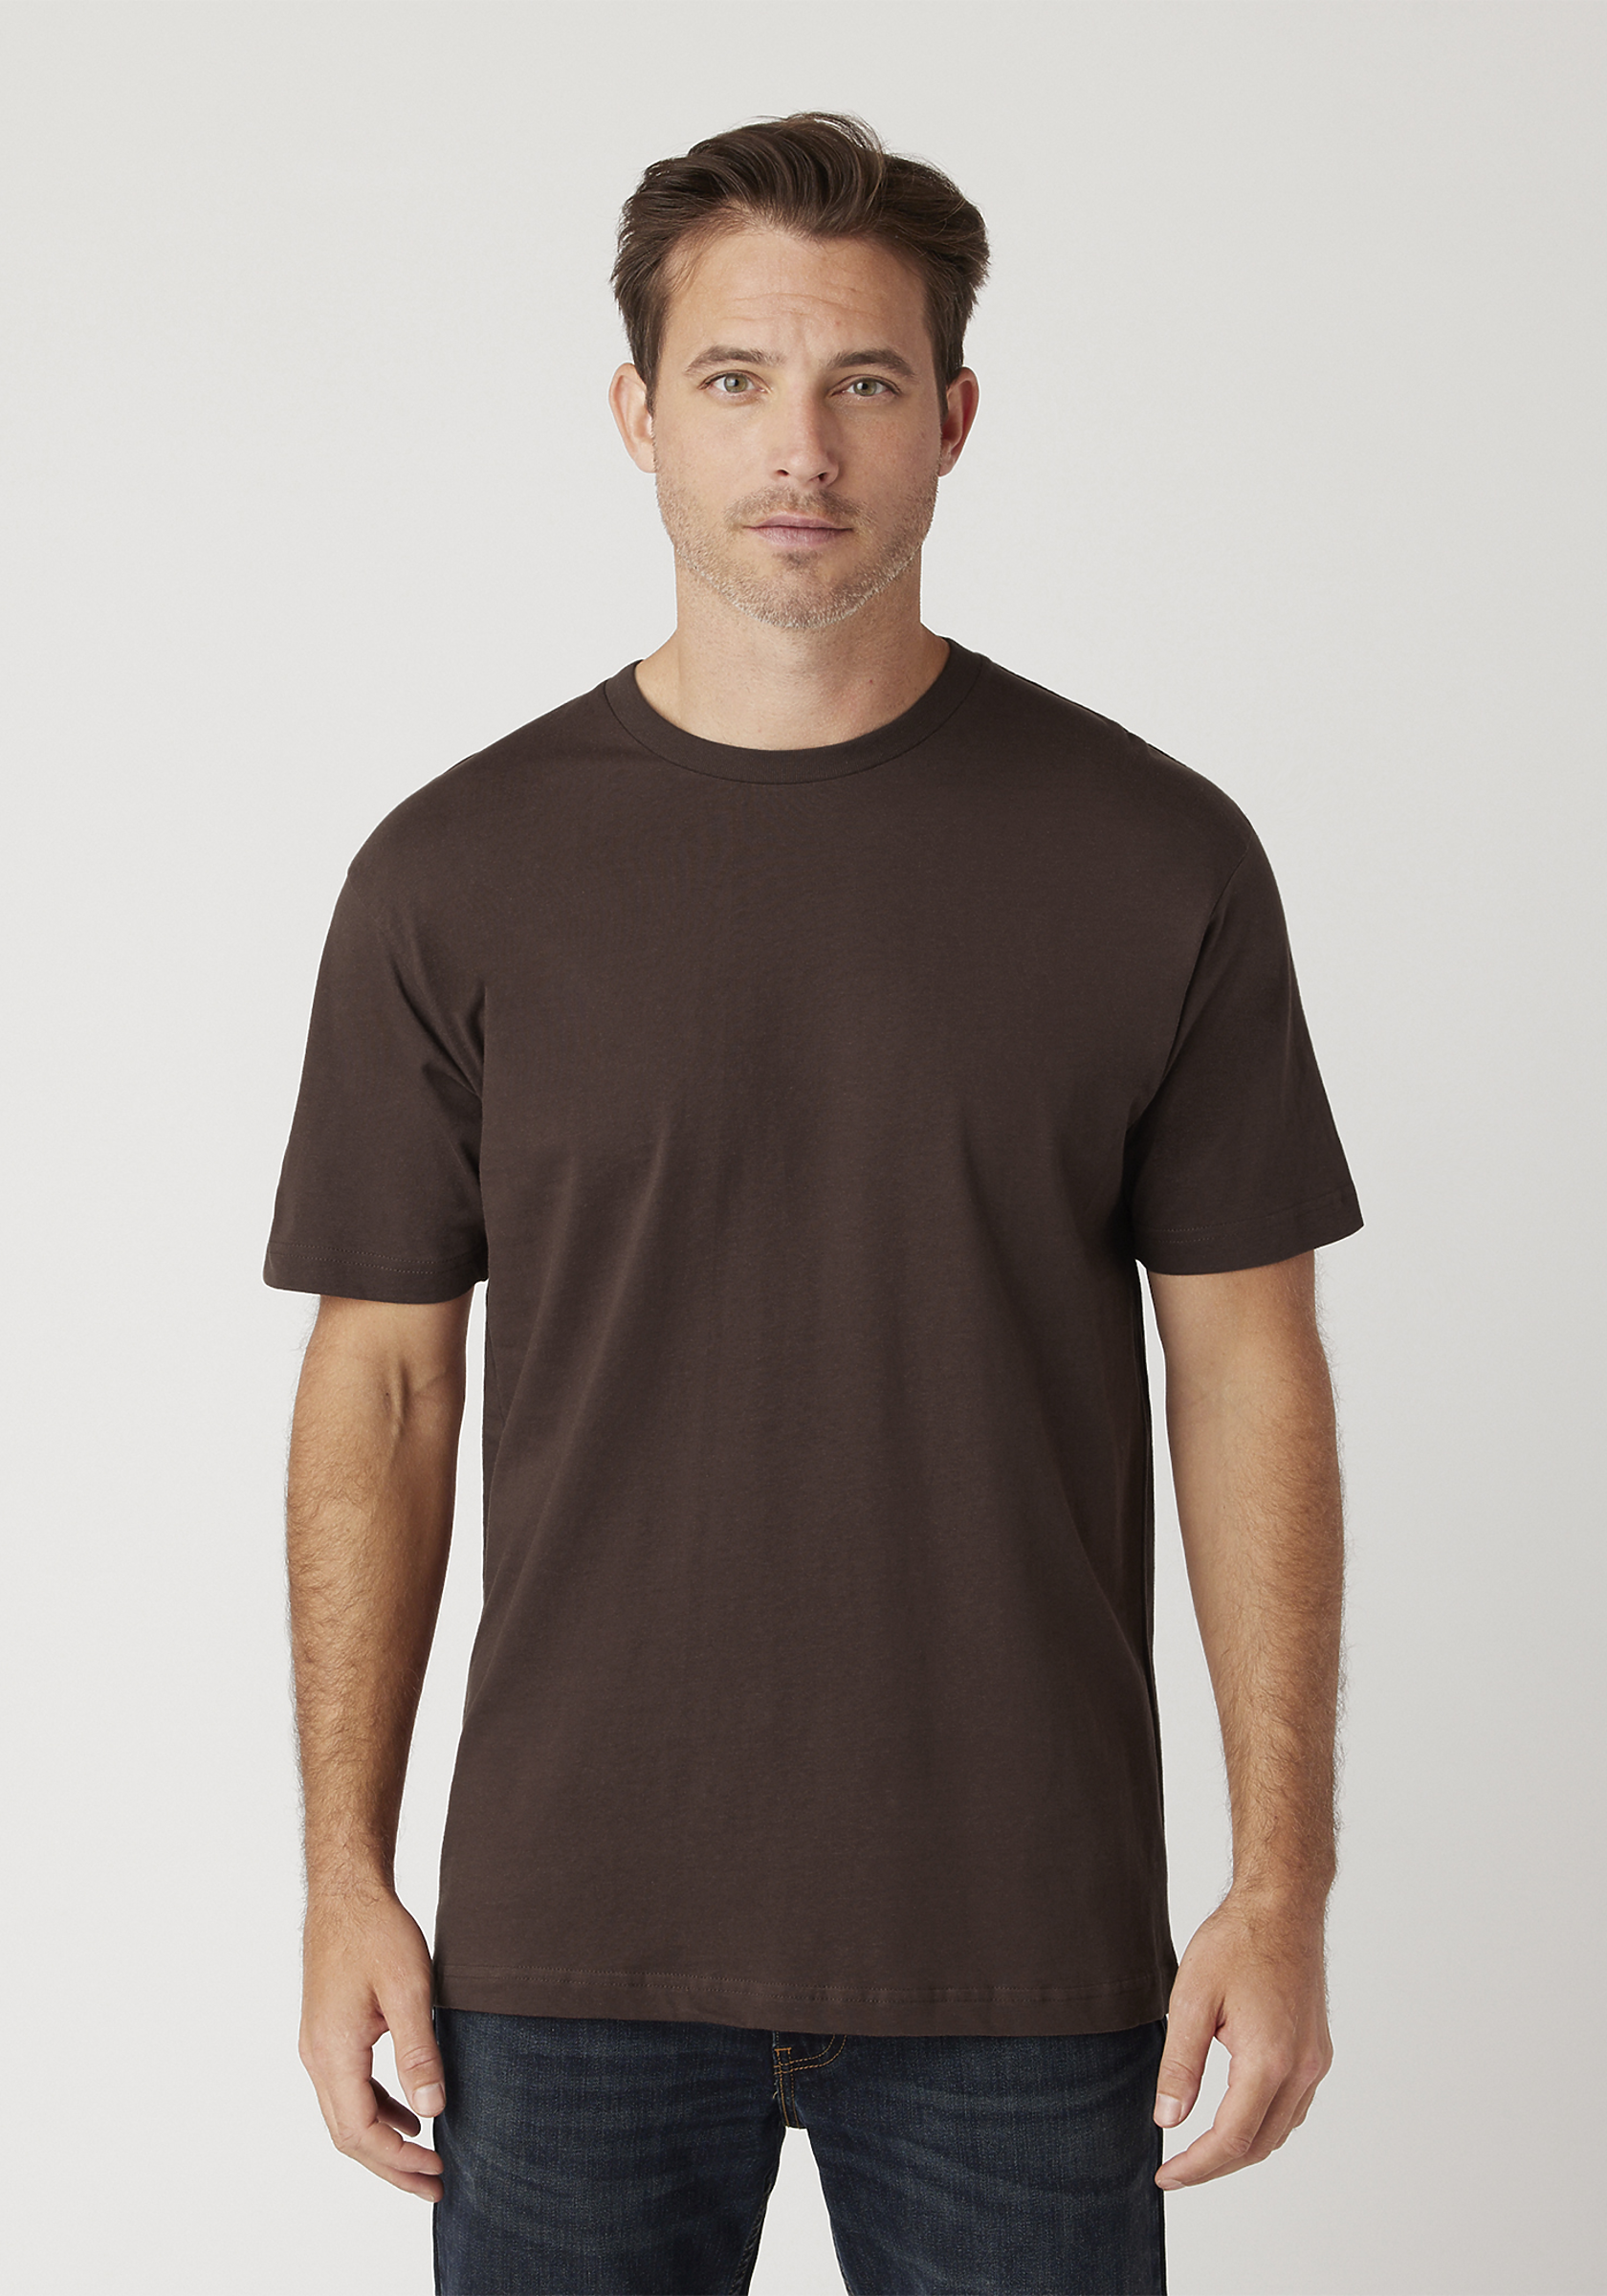 Phenix Baits T-Shirt Men's Short Sleeve Cotton - Gray